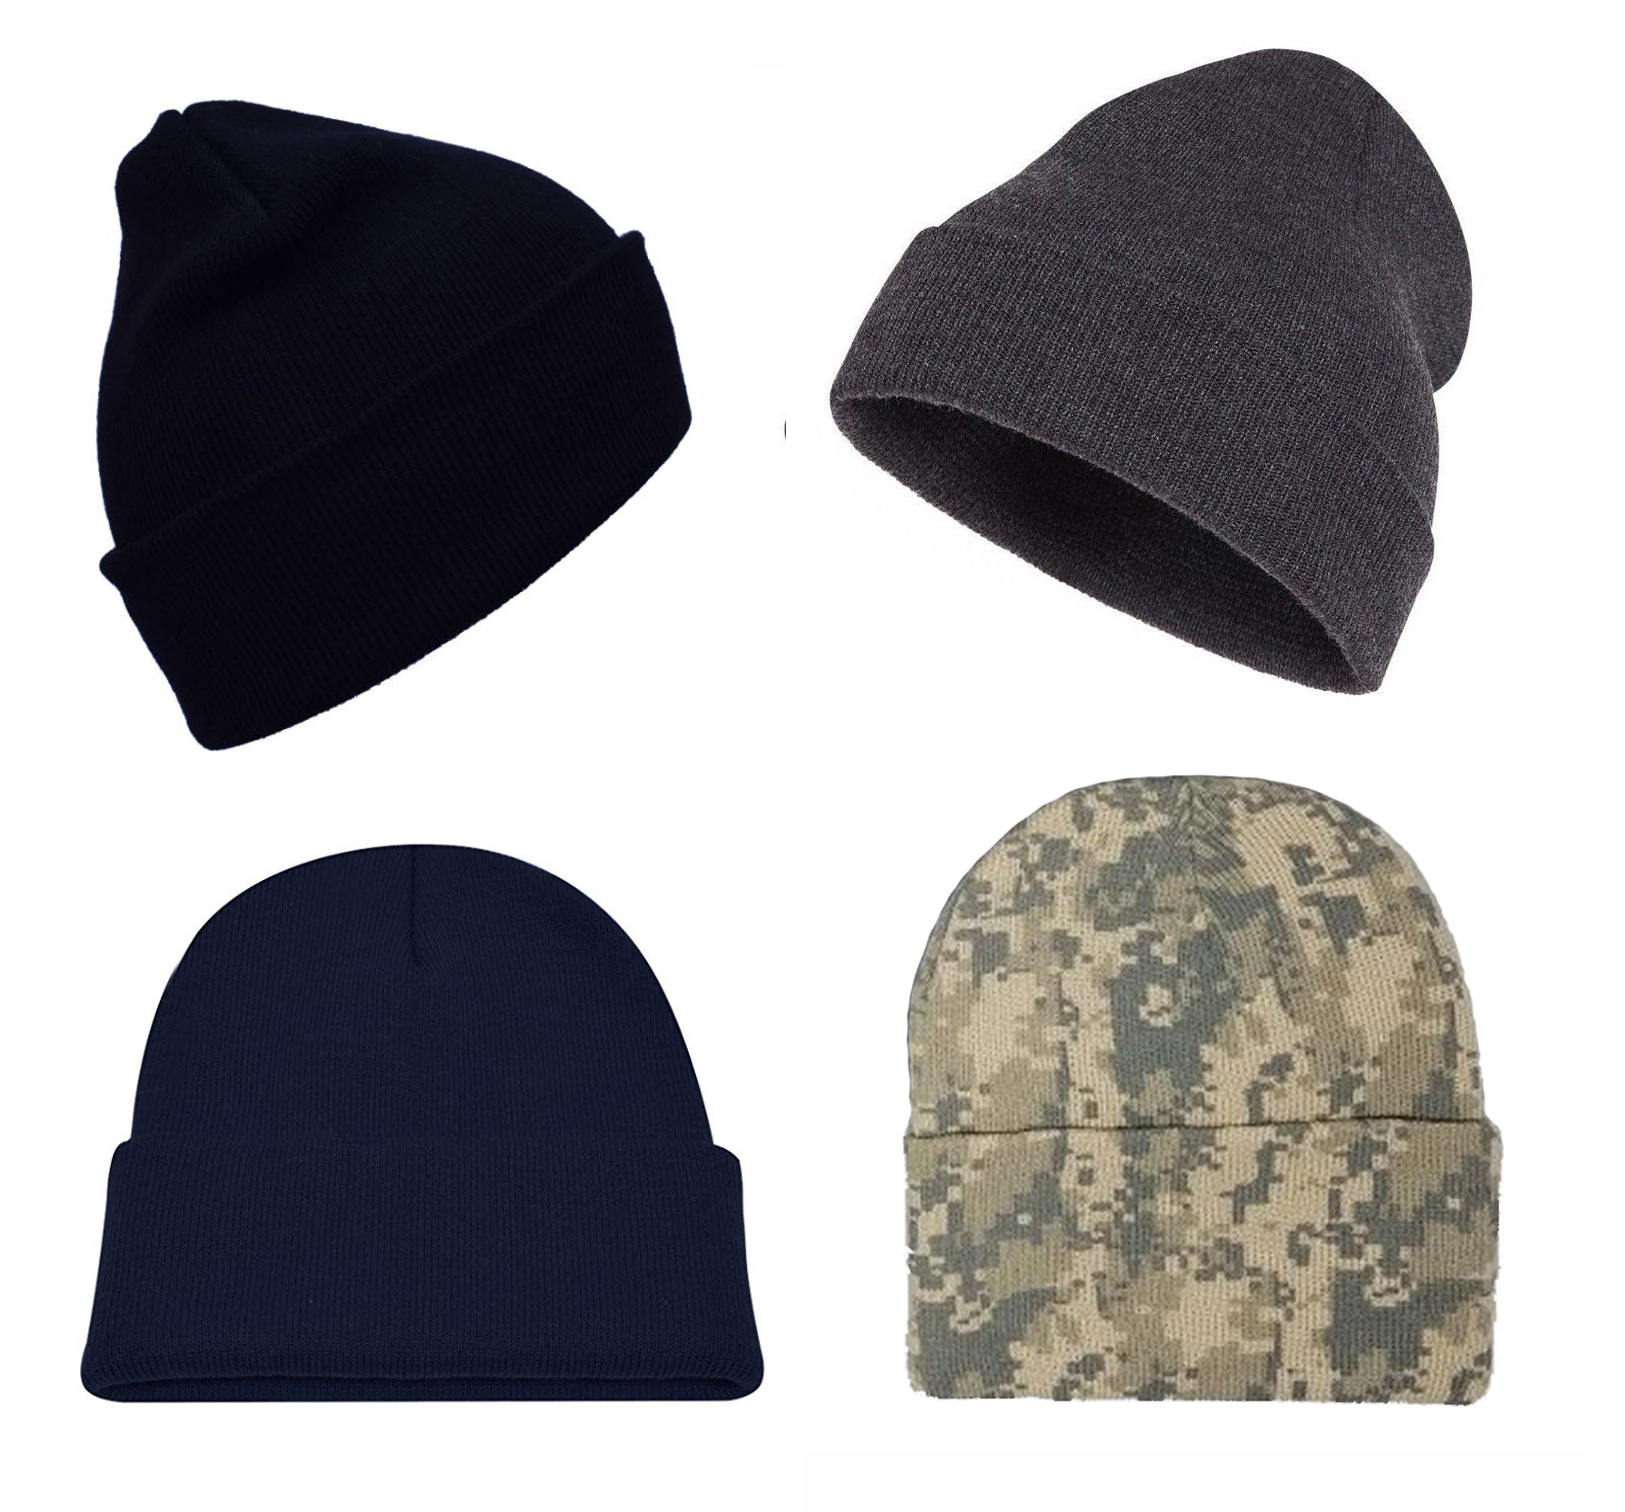 SET OF 4 BEANIE Warm Winter Beanies Hats Cap Toboggans Thermal Knit Cuff Acrylic Ski hats 12" (Navy+Black+Gray+Camo) - image 1 of 5